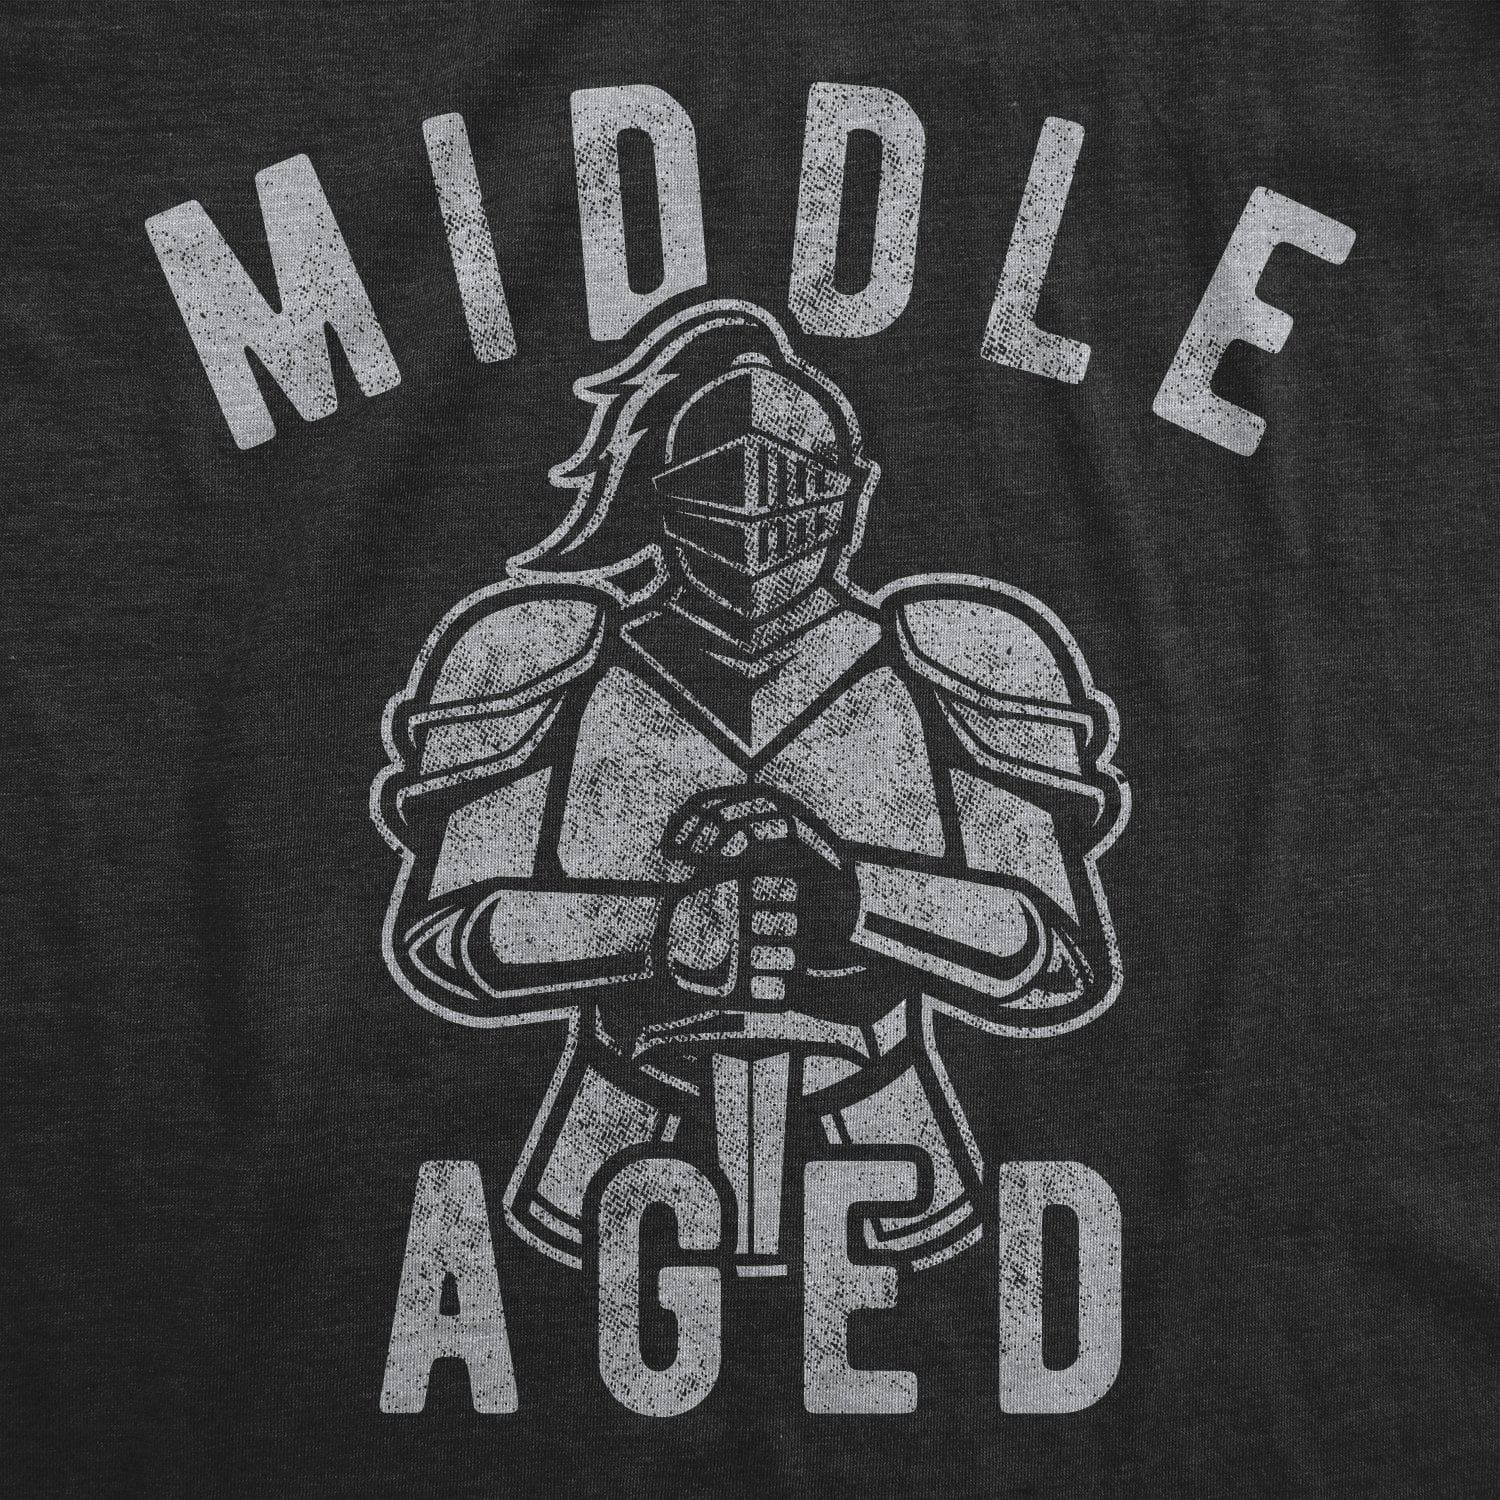 Middle Aged Men's Tshirt - Crazy Dog T-Shirts